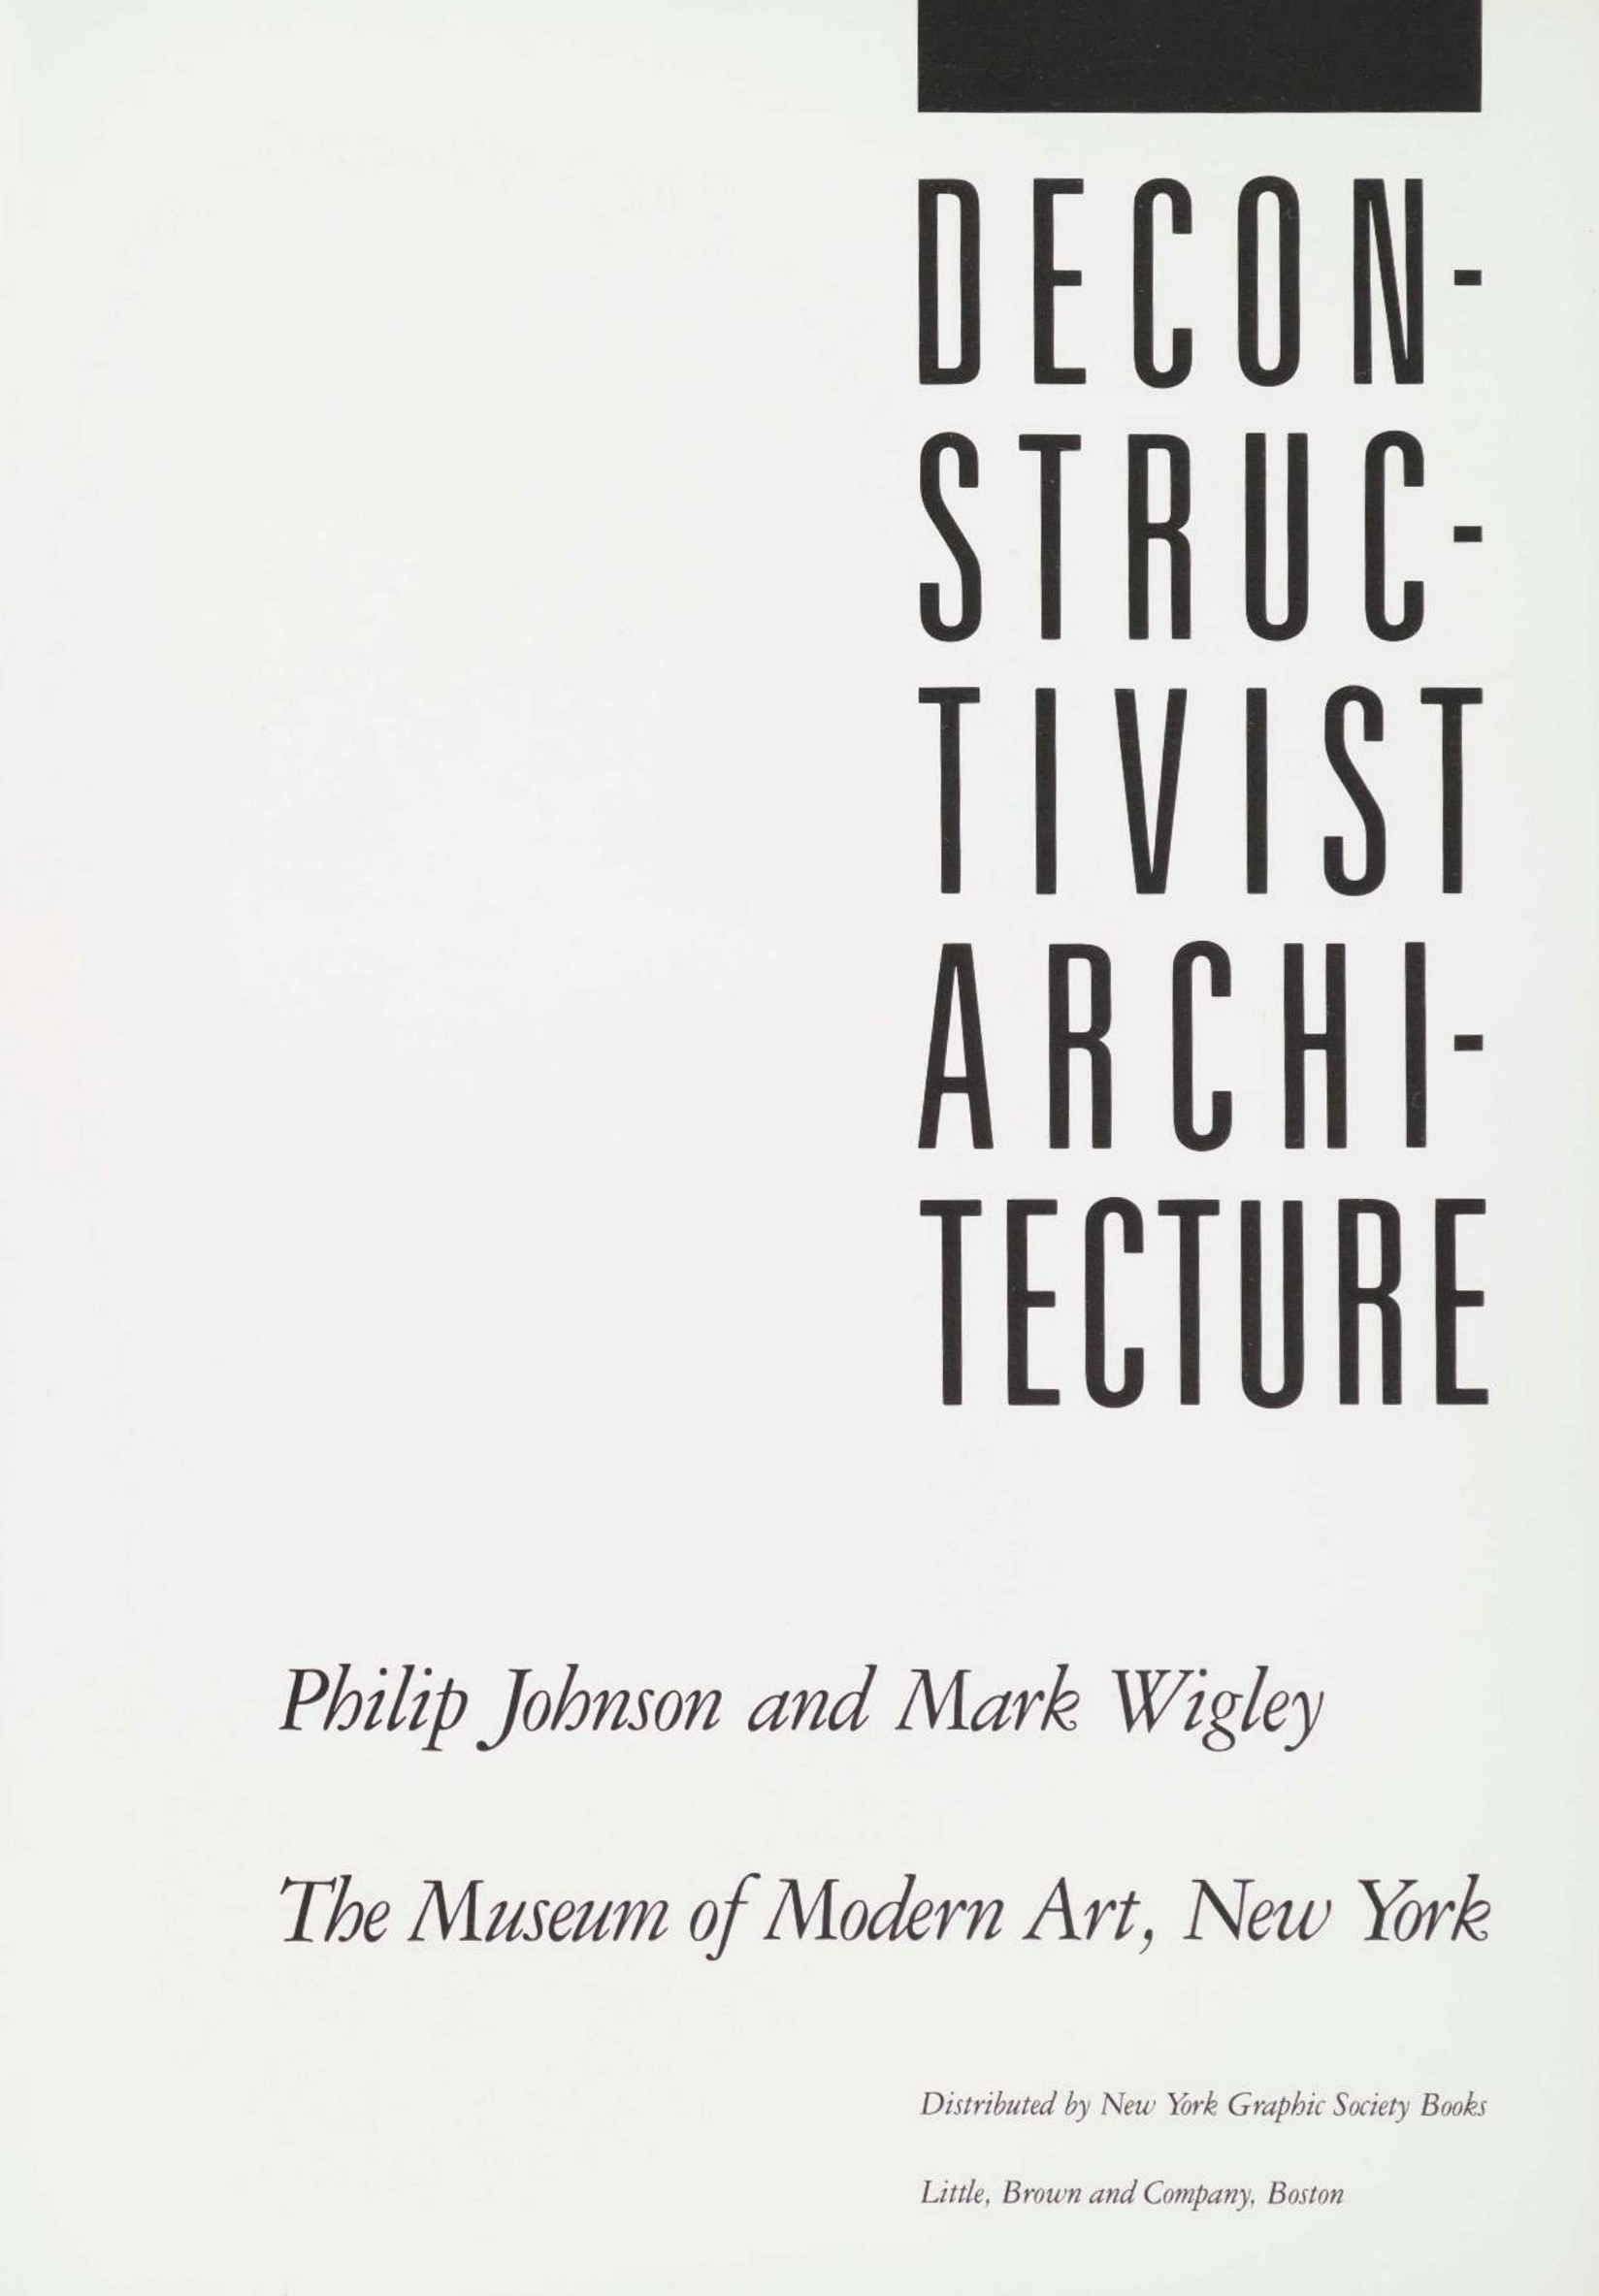 Deconstructivist architecture / Philip Johnson and Mark Wigley. — New York : The Museum of Modern Art, 1988